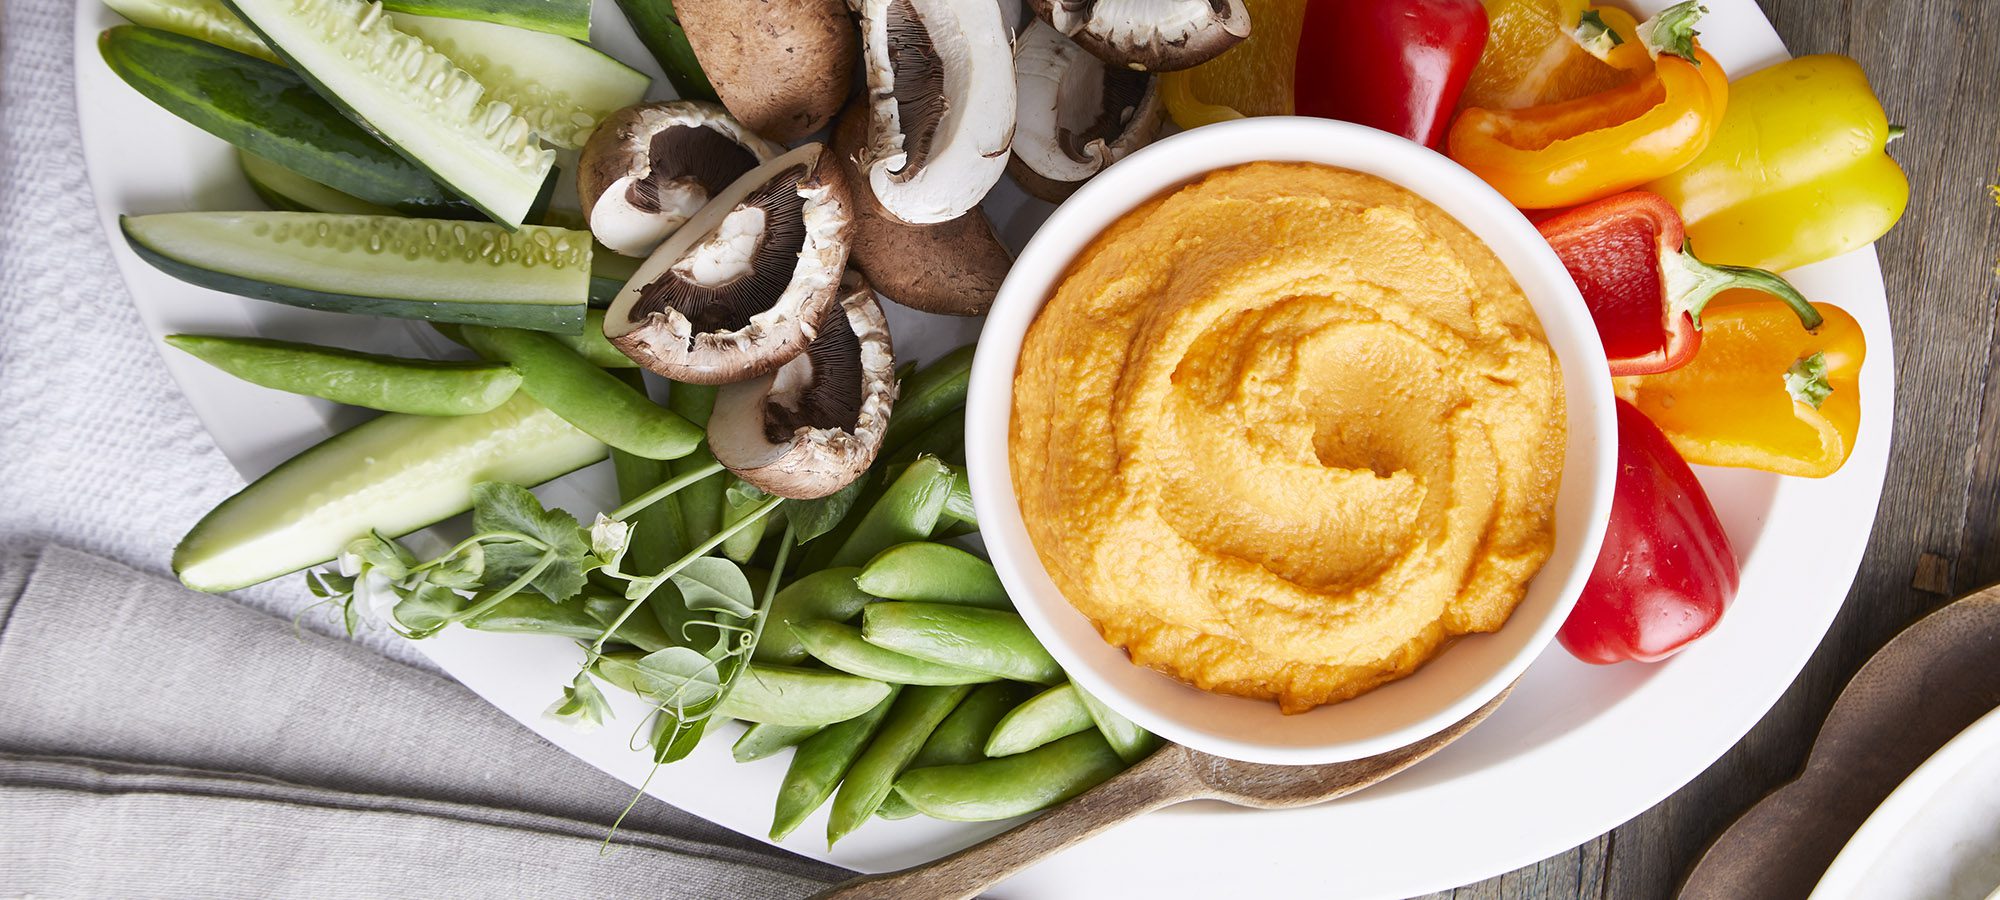 Sweet Potato Hummus - Plant-Based Vegan Hummus Recipe